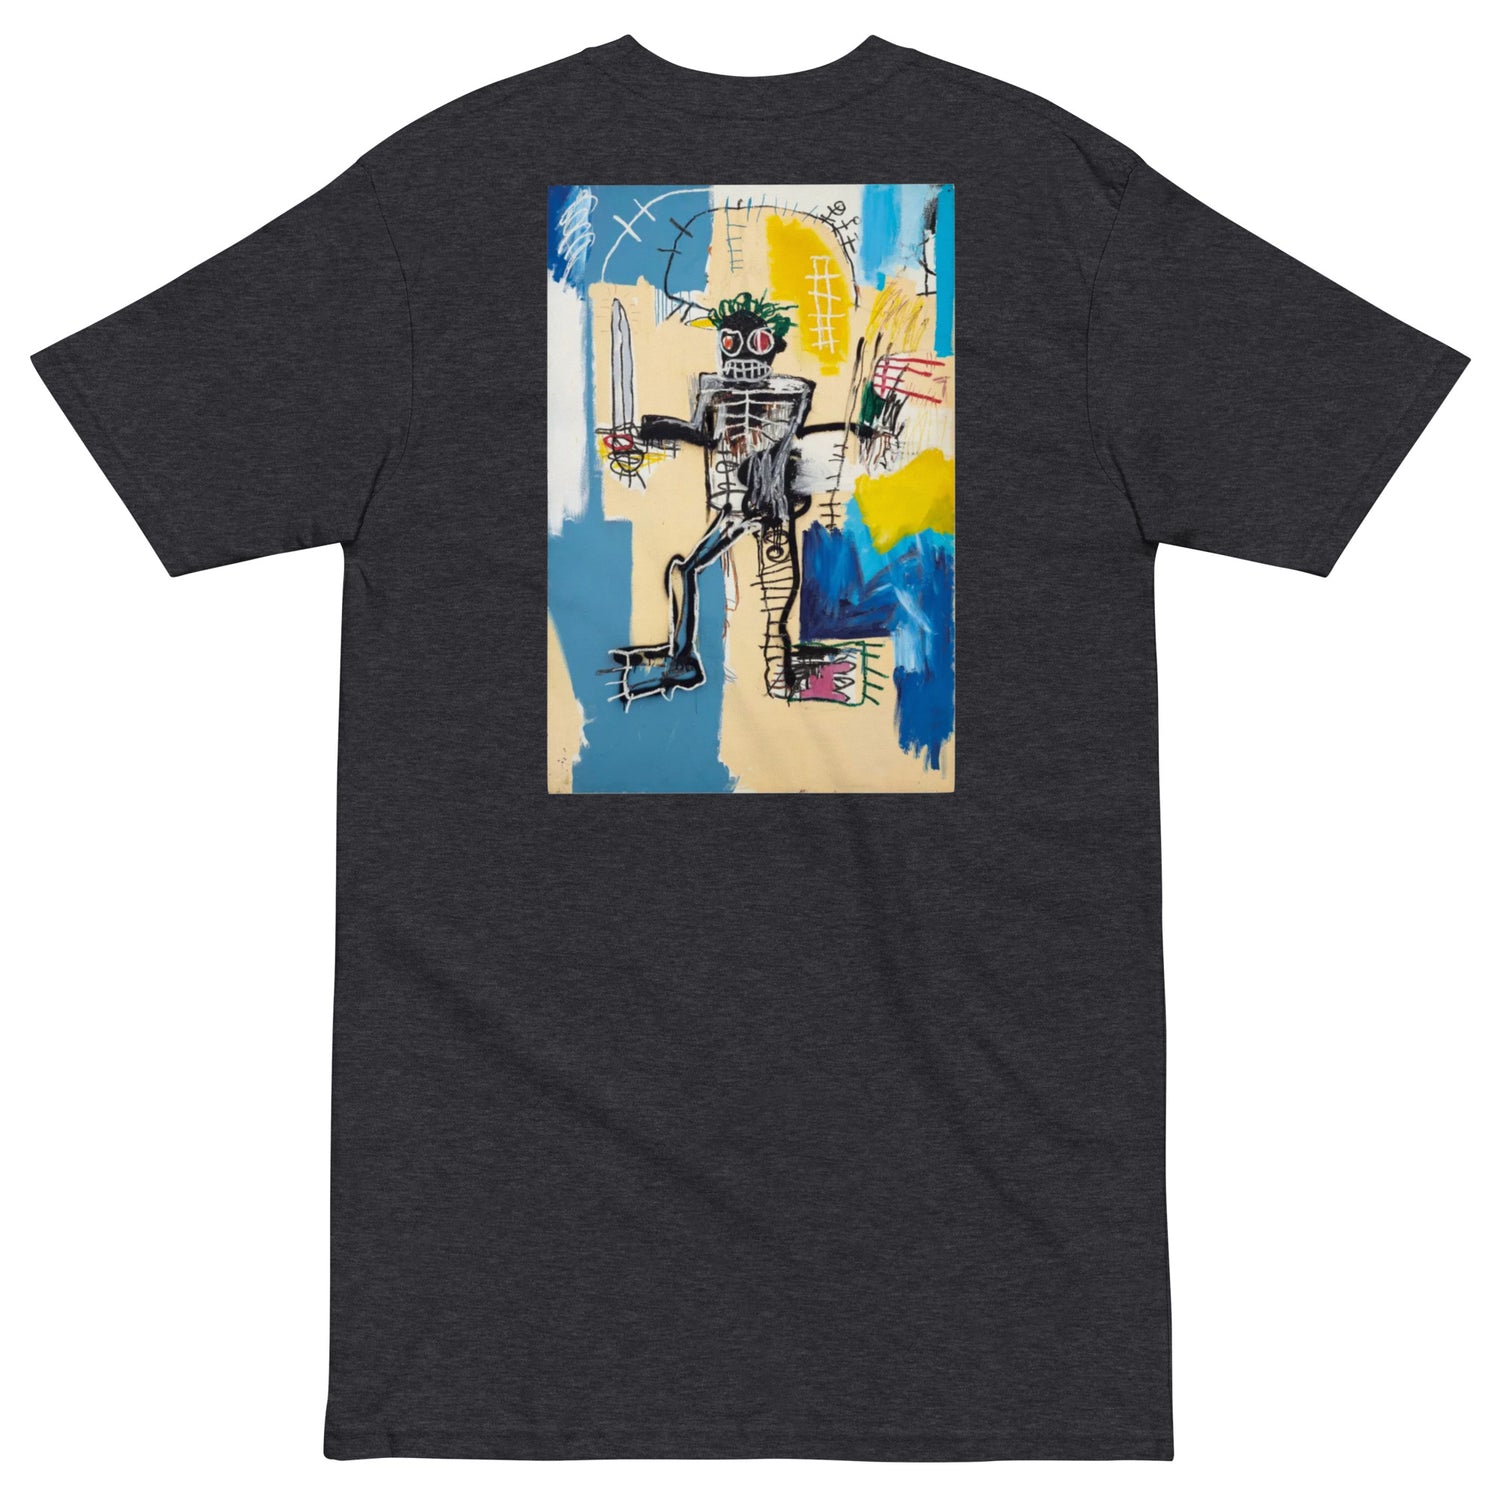 Jean-Michel Basquiat "Warrior" 1982 Artwork Embroidered + Printed Premium Streetwear T-shirt Charcoal Grey